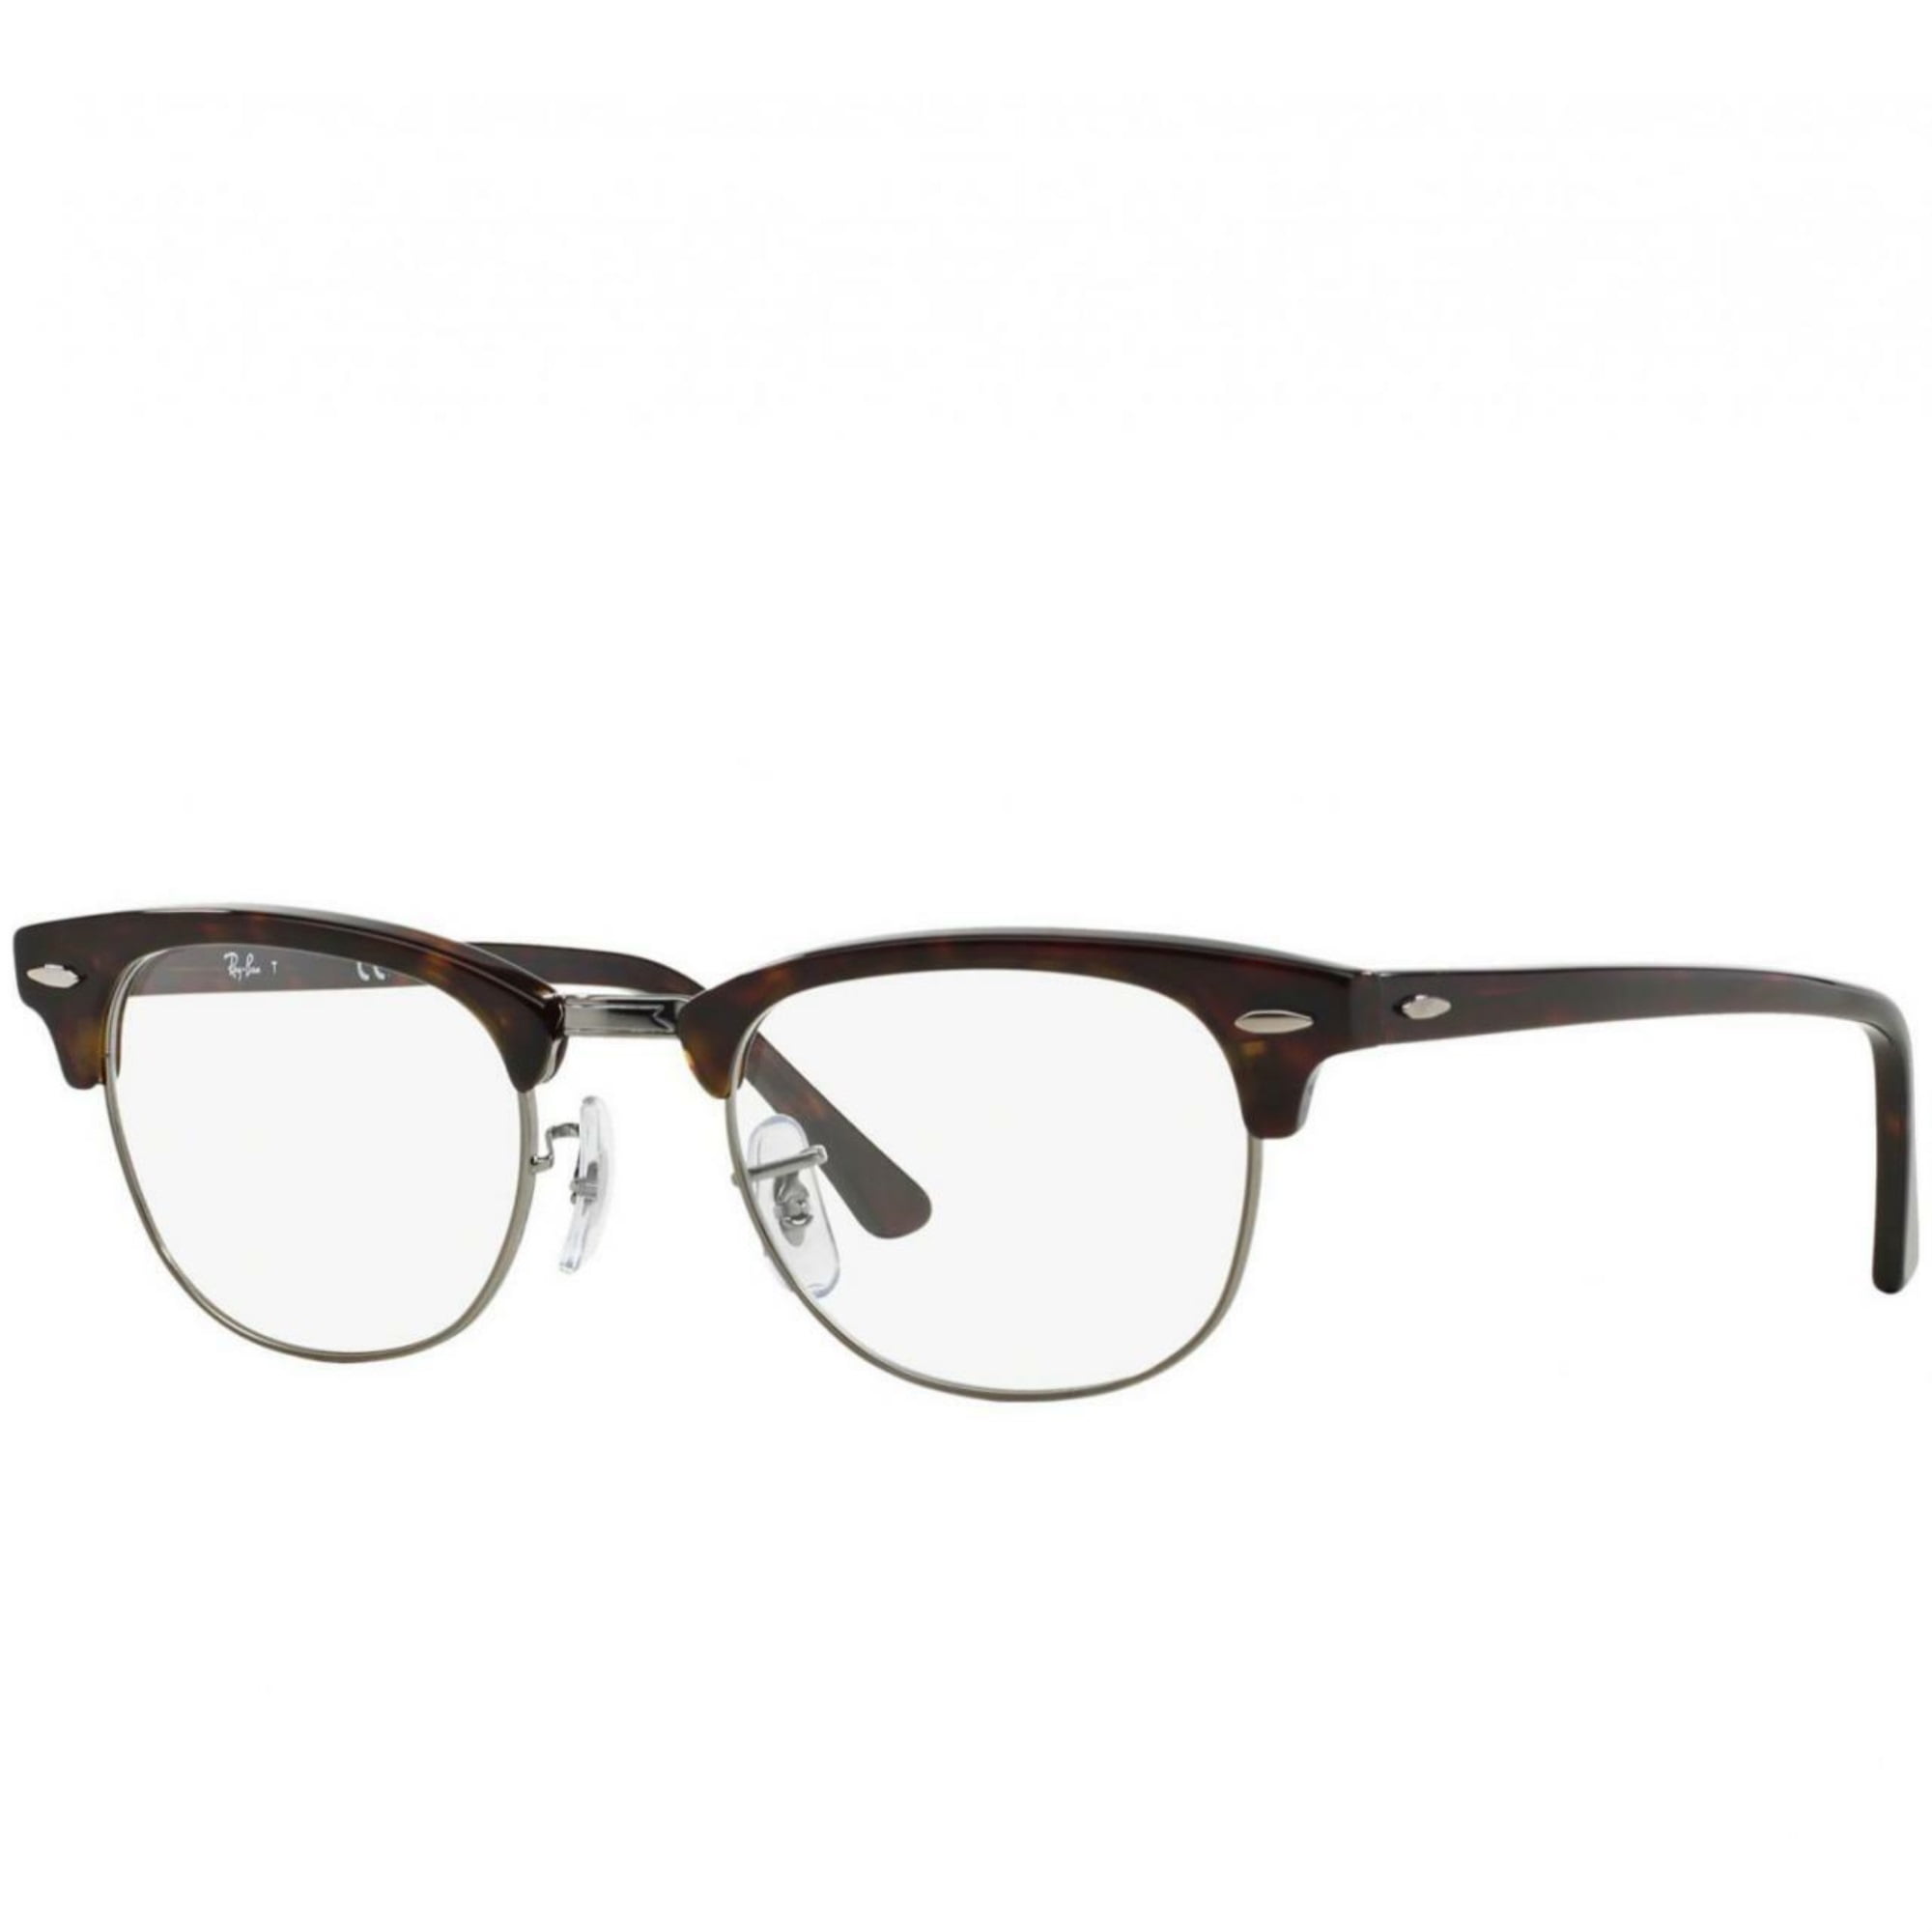 Ray Ban Rb5154 12 Clubmaster Optics Tortoise Full Rim Square Eyeglasses Frames Walmart Com